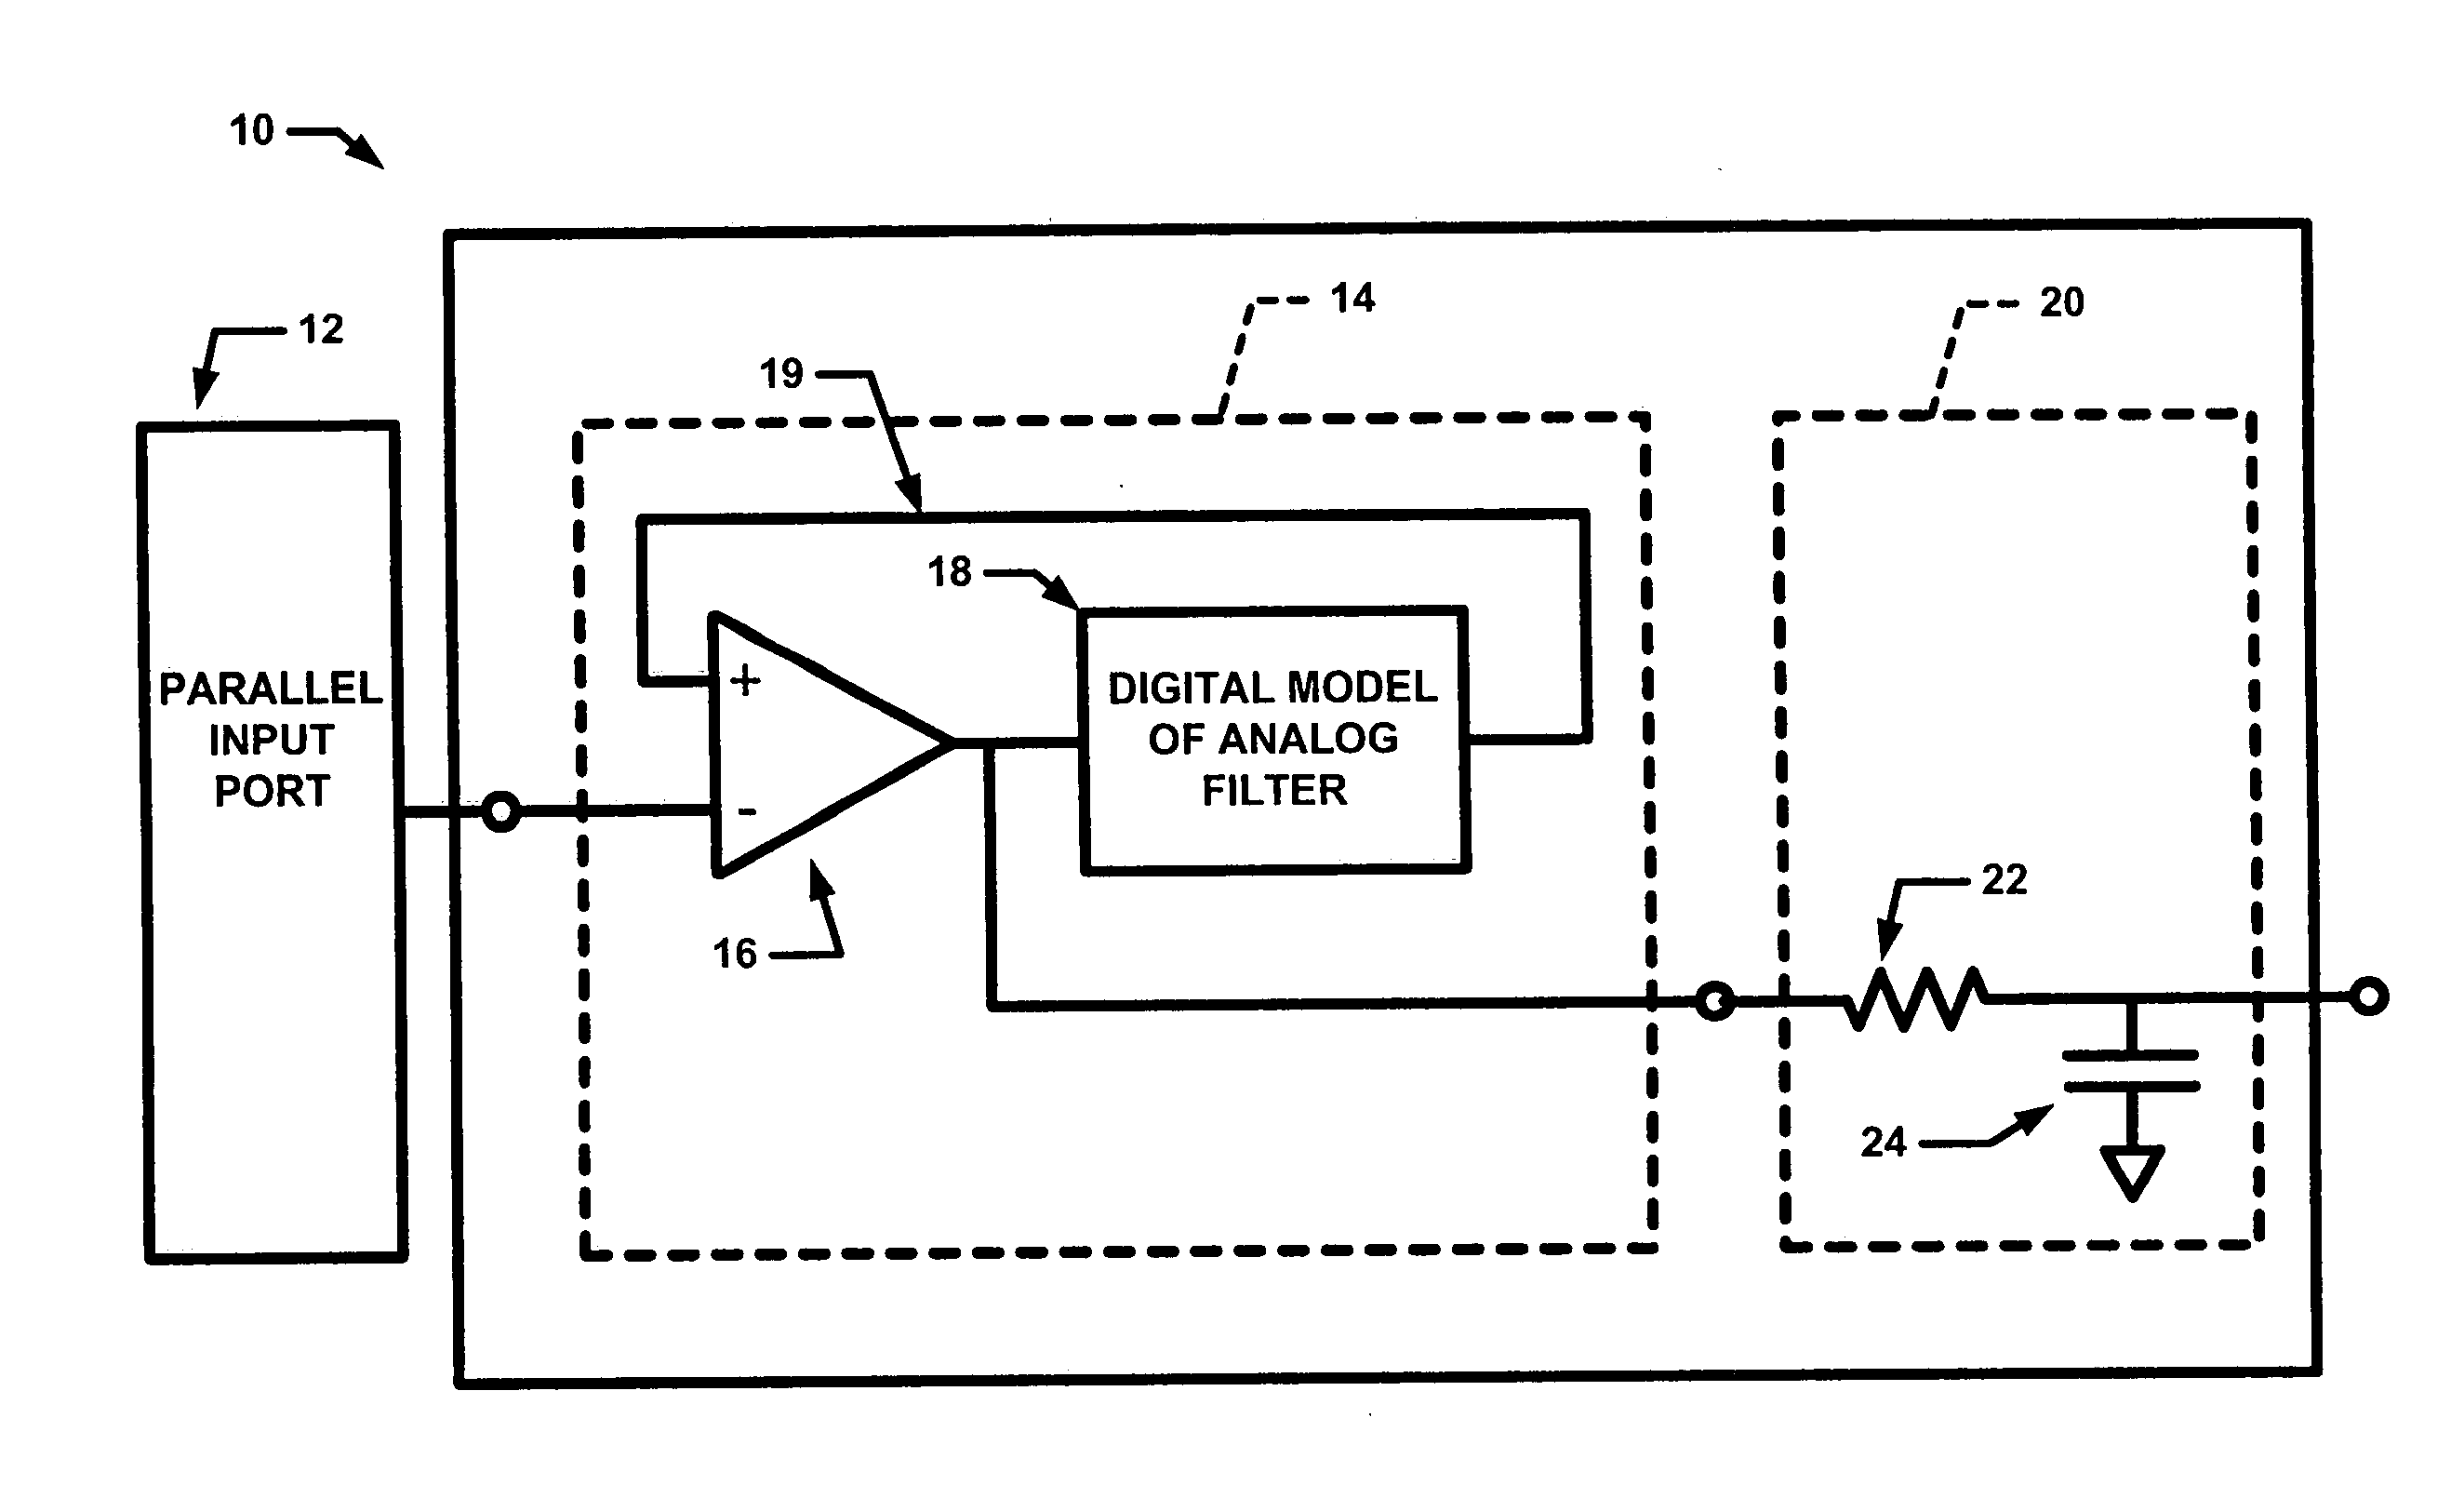 Digital to analog converter